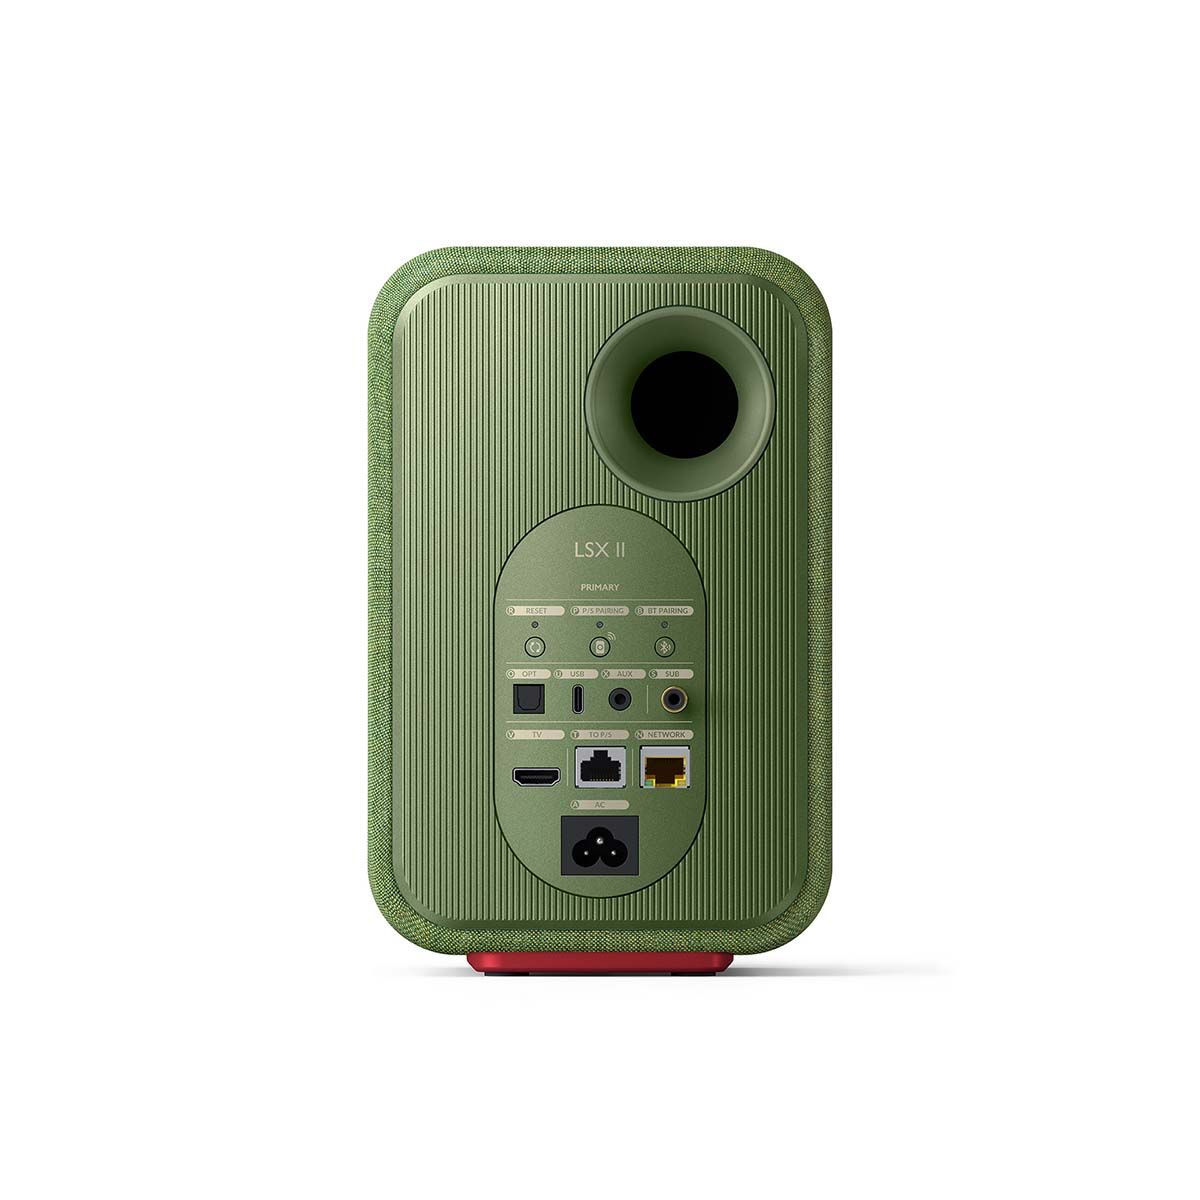 KEF LSX II Wireless HiFi Speakers - Olive Green - rear view of primary speaker